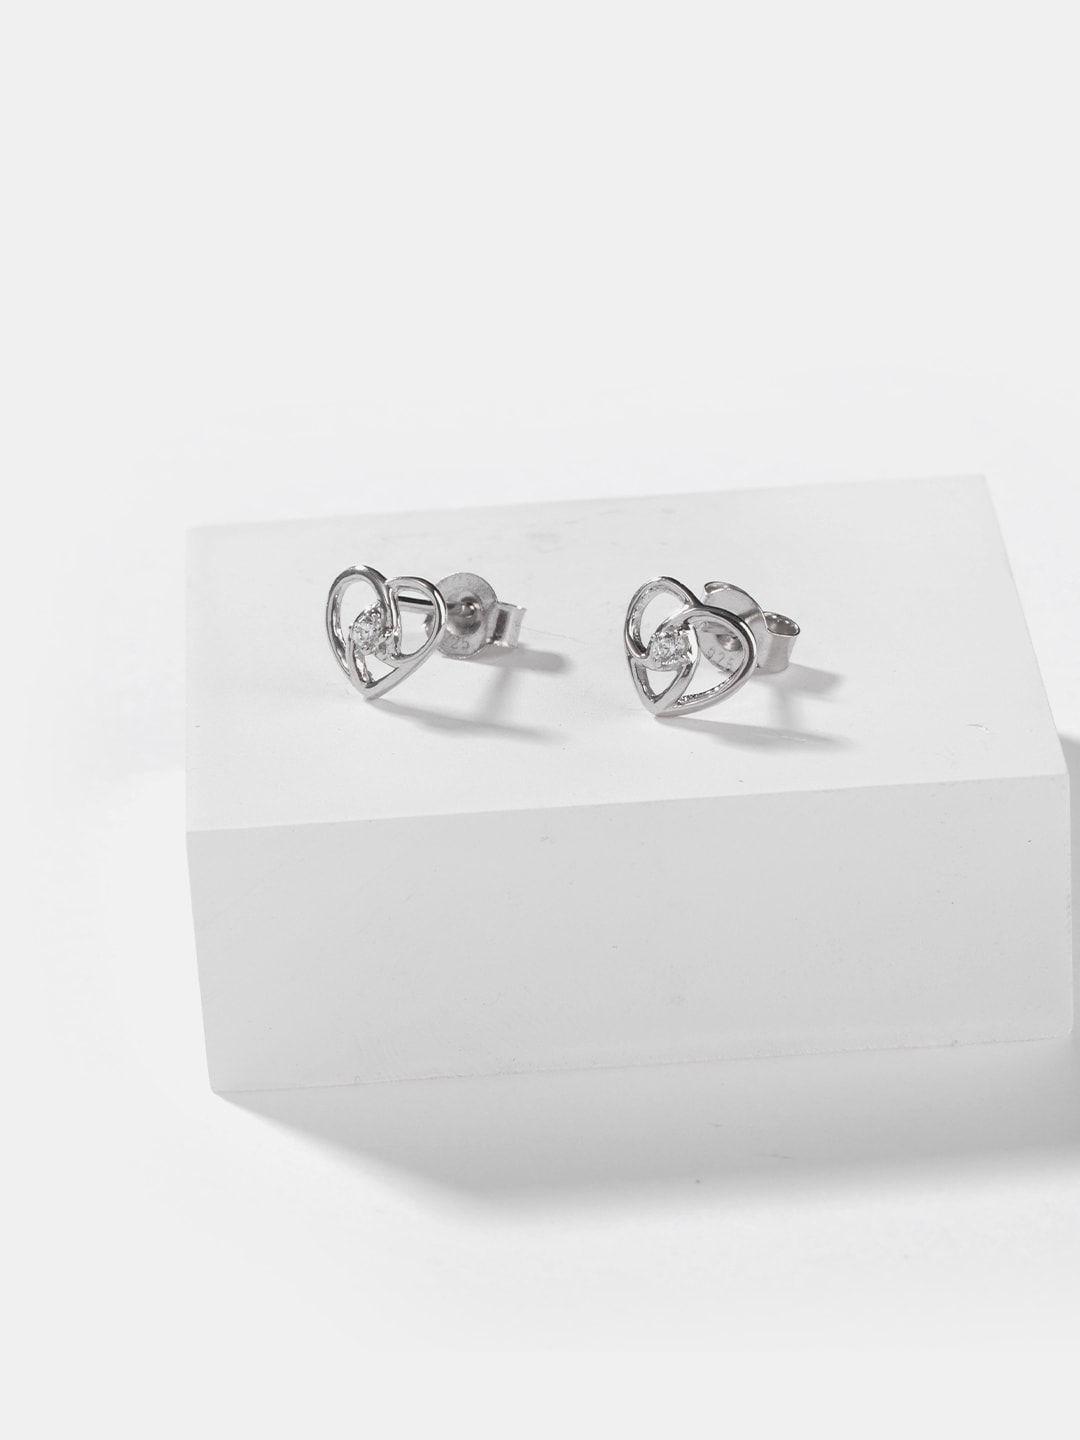 shaya 925 silver cz heart shaped studs earrings